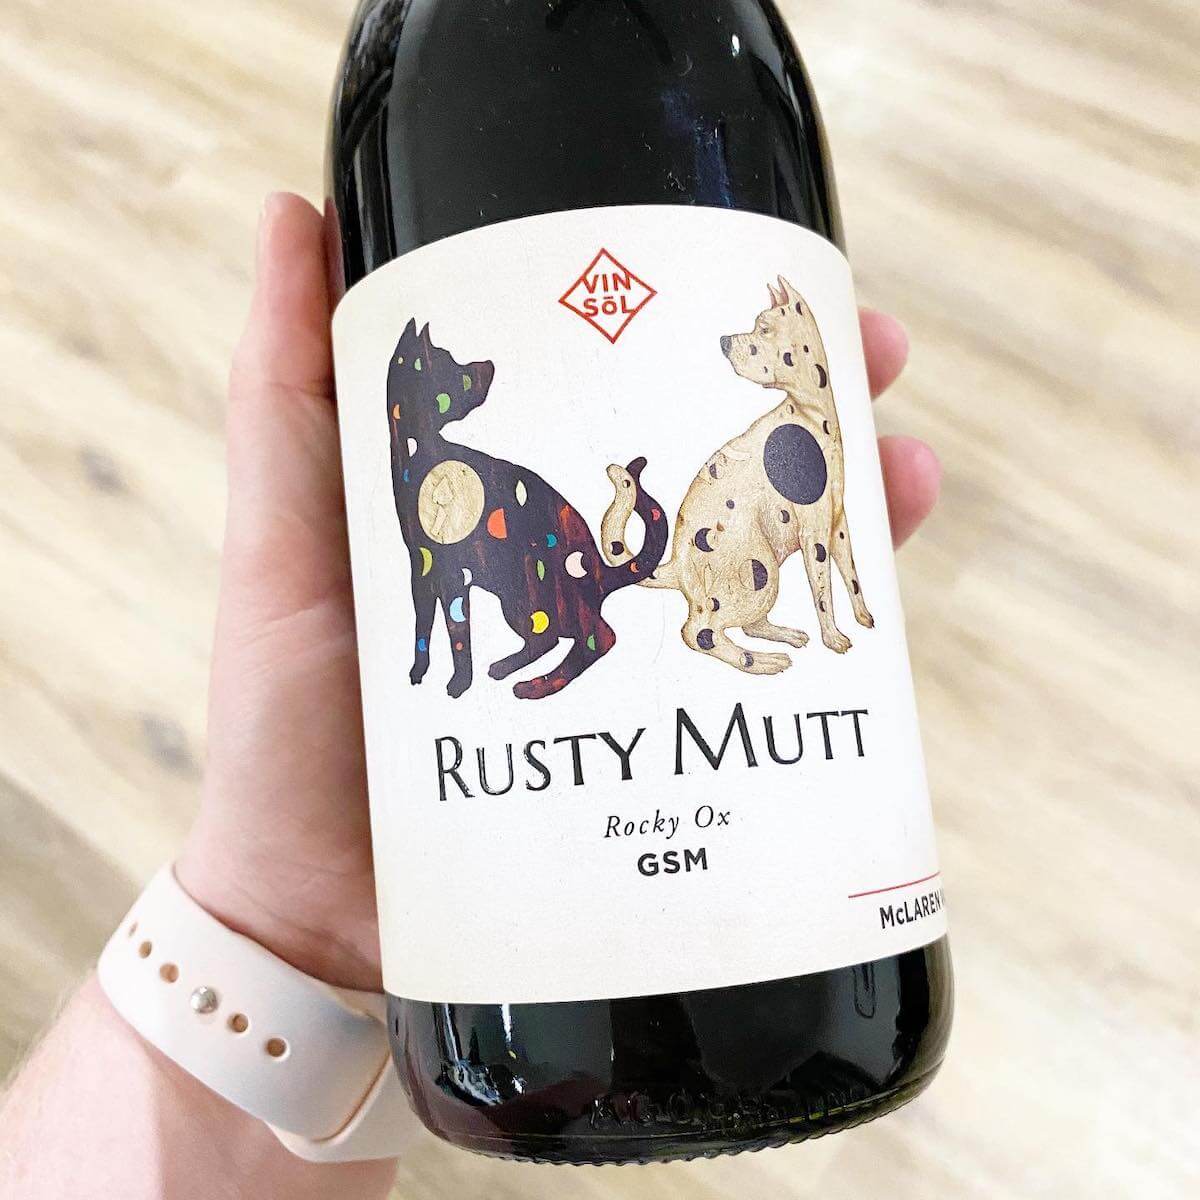 Rusty Mutt 2018 Rocky Ox GSM (Grenache, Shiraz, Mataro)